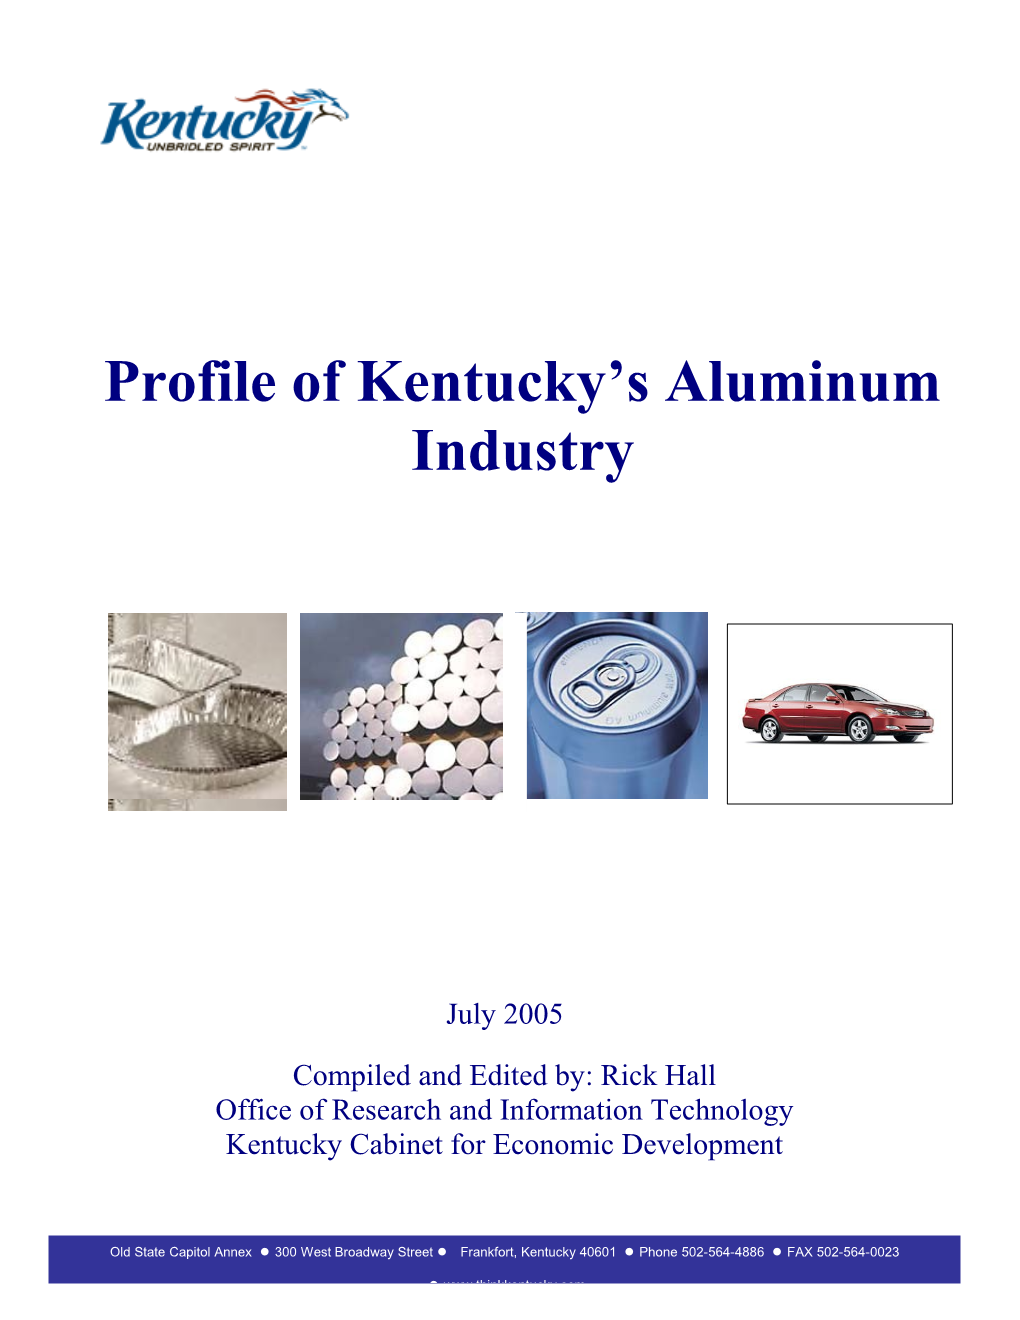 Aluminum Industry in Kentucky